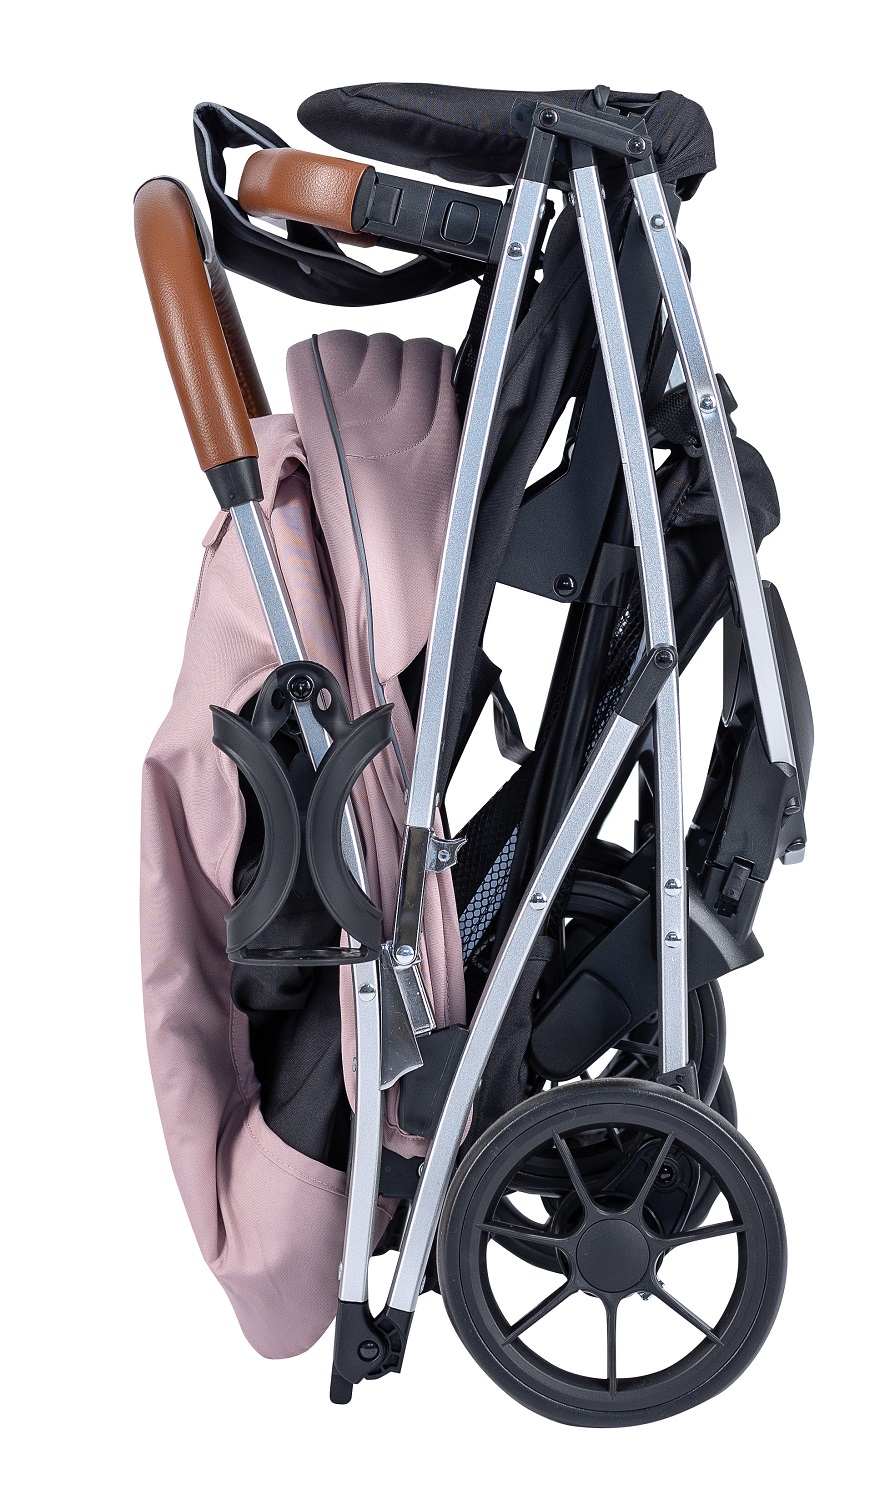 Прогулочная коляска для ребенка FreeON LUX Premium Dusty Pink-Black - фото 6